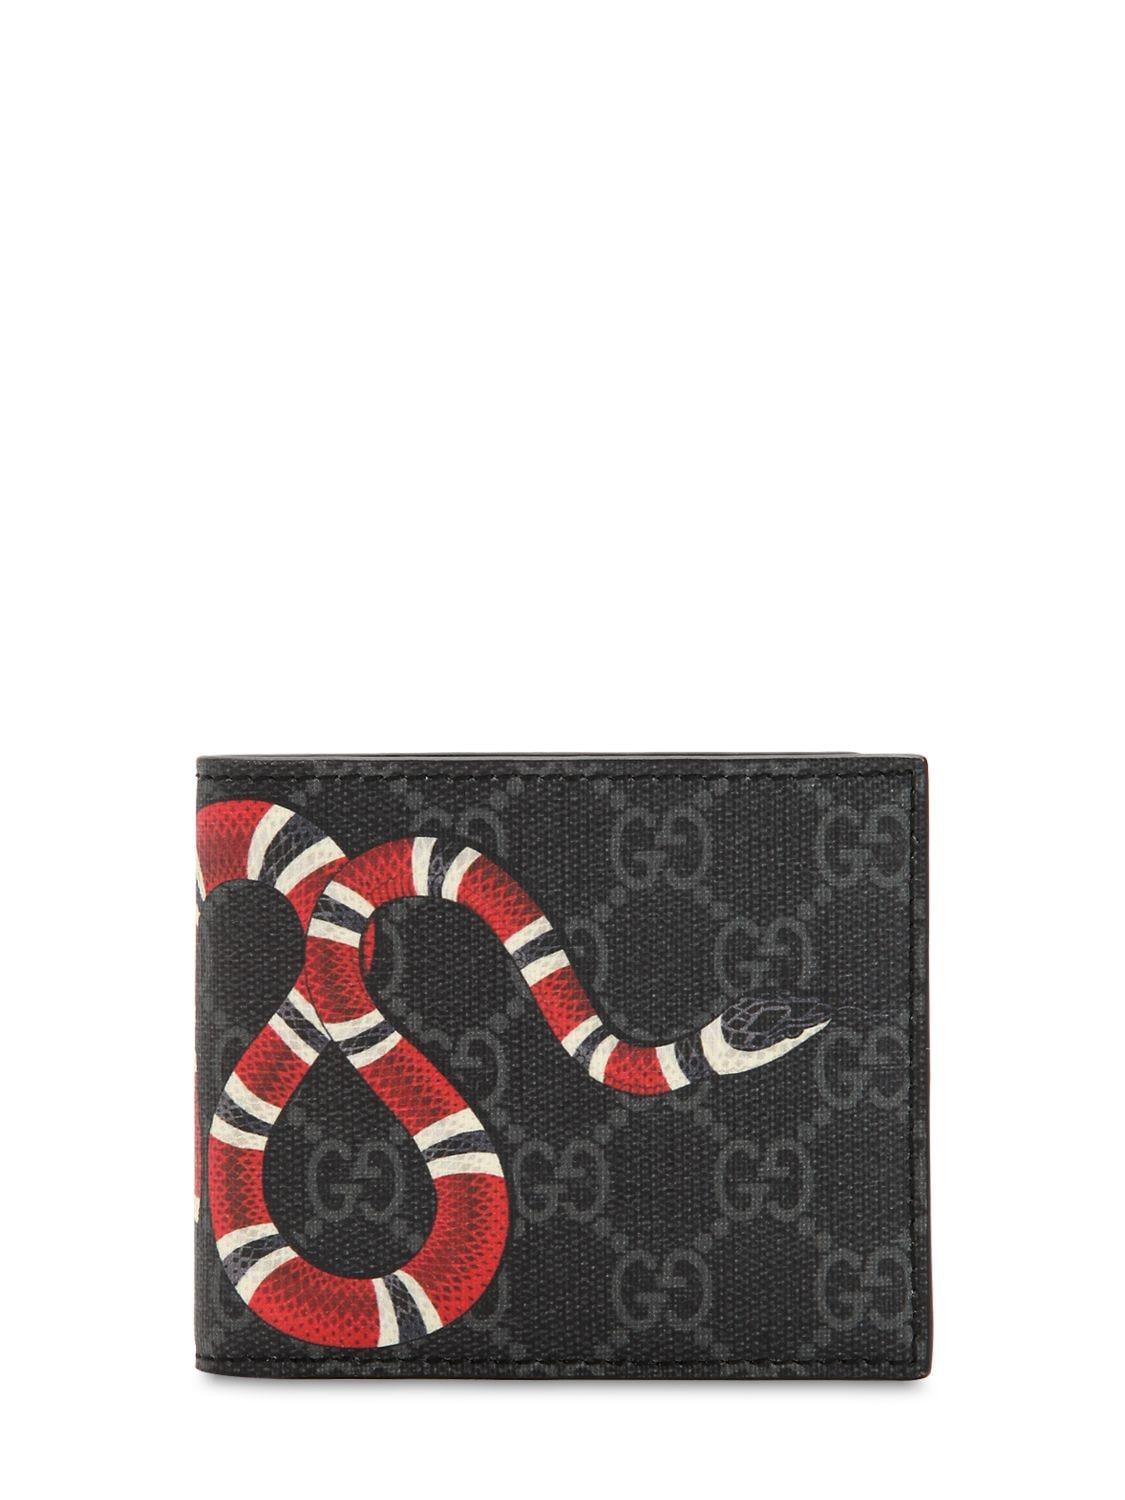 gucci snake purse black